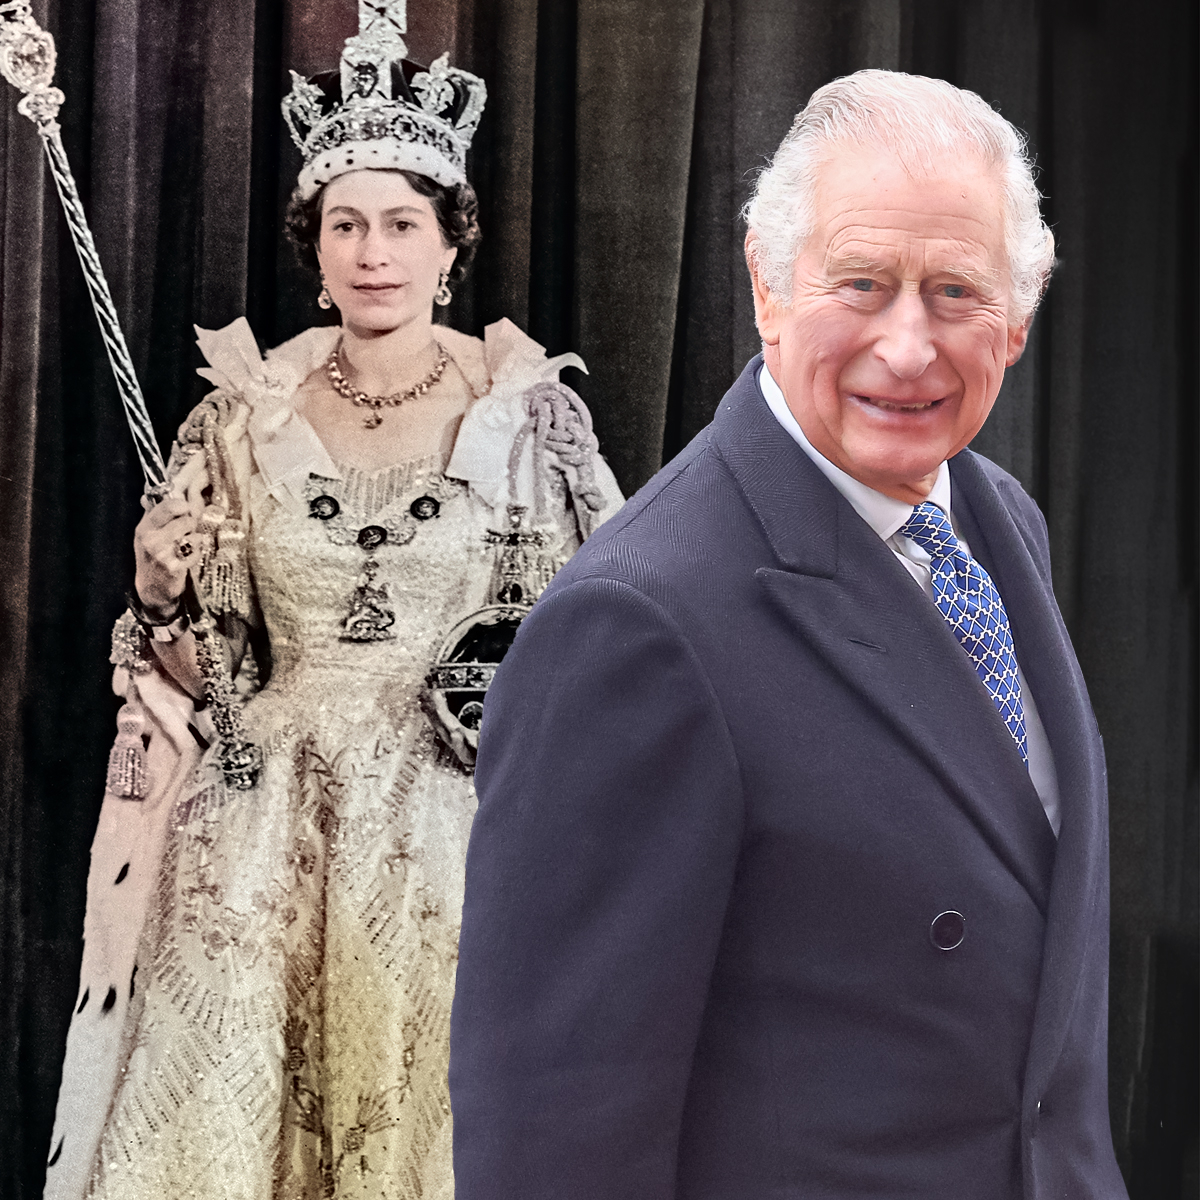 How King Charles III’s Coronation Differs From Queen Elizabeth II’s